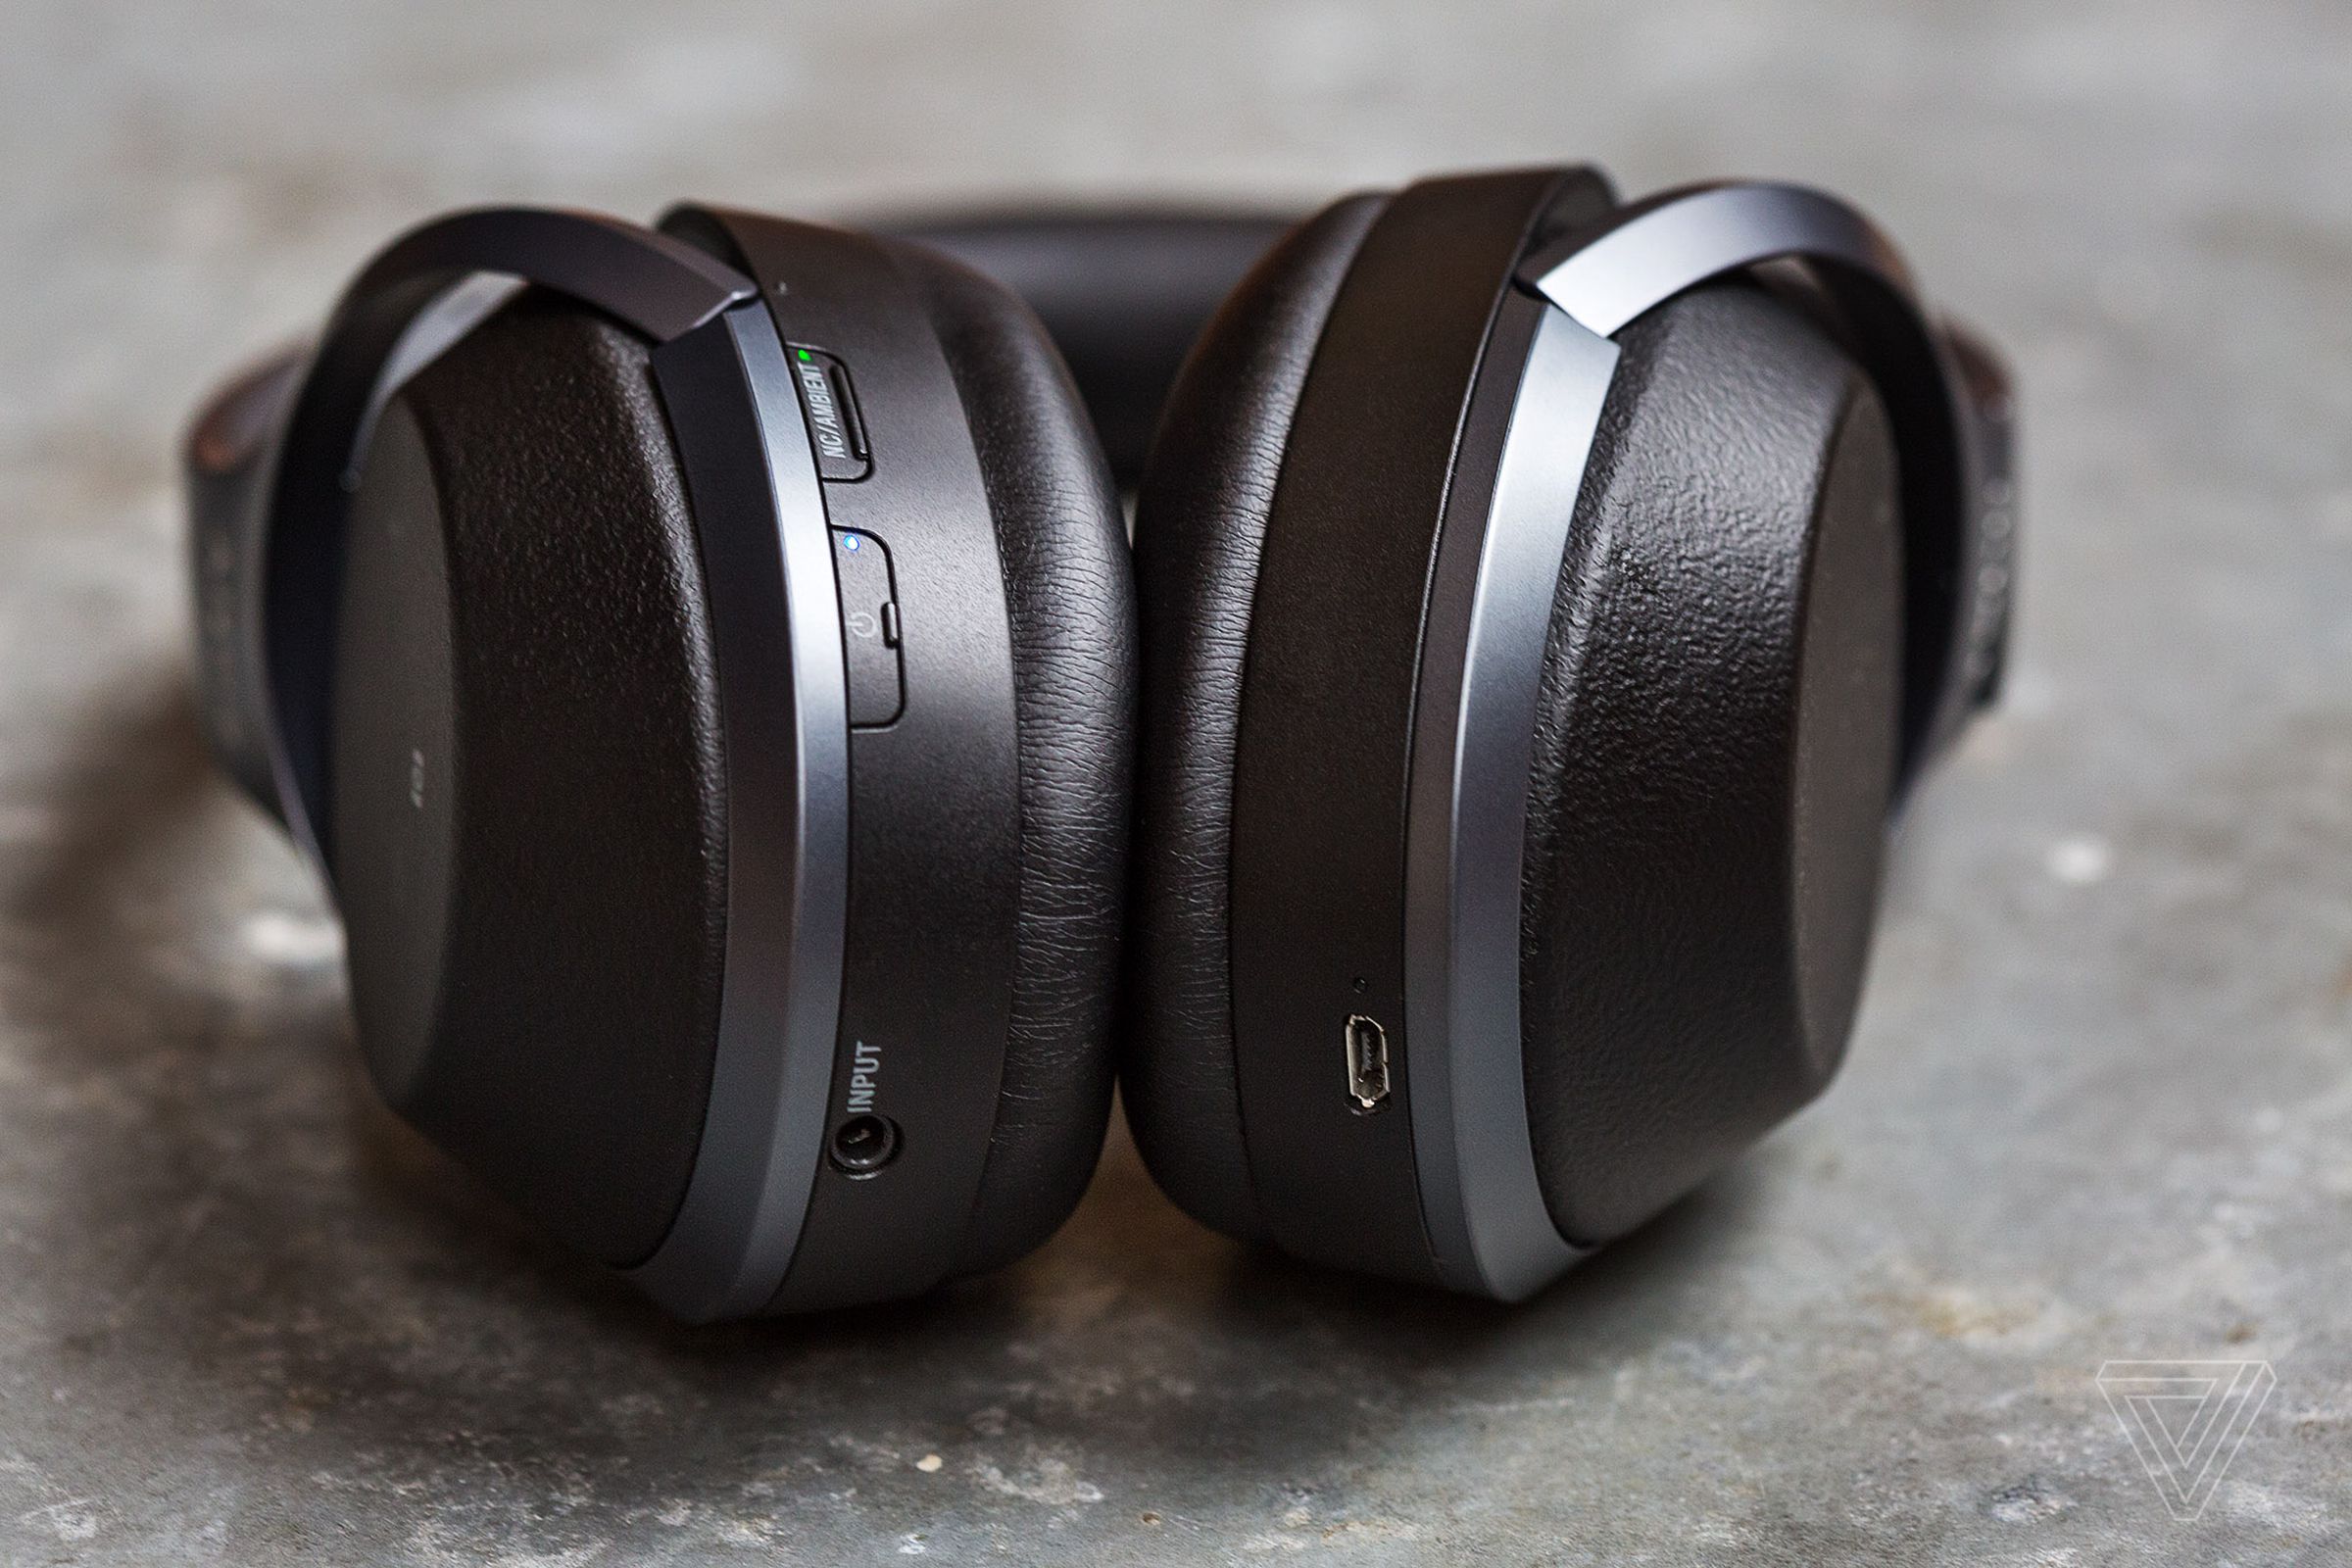 Sony’s new 1000XM2 headphones charge via a MicroUSB port.